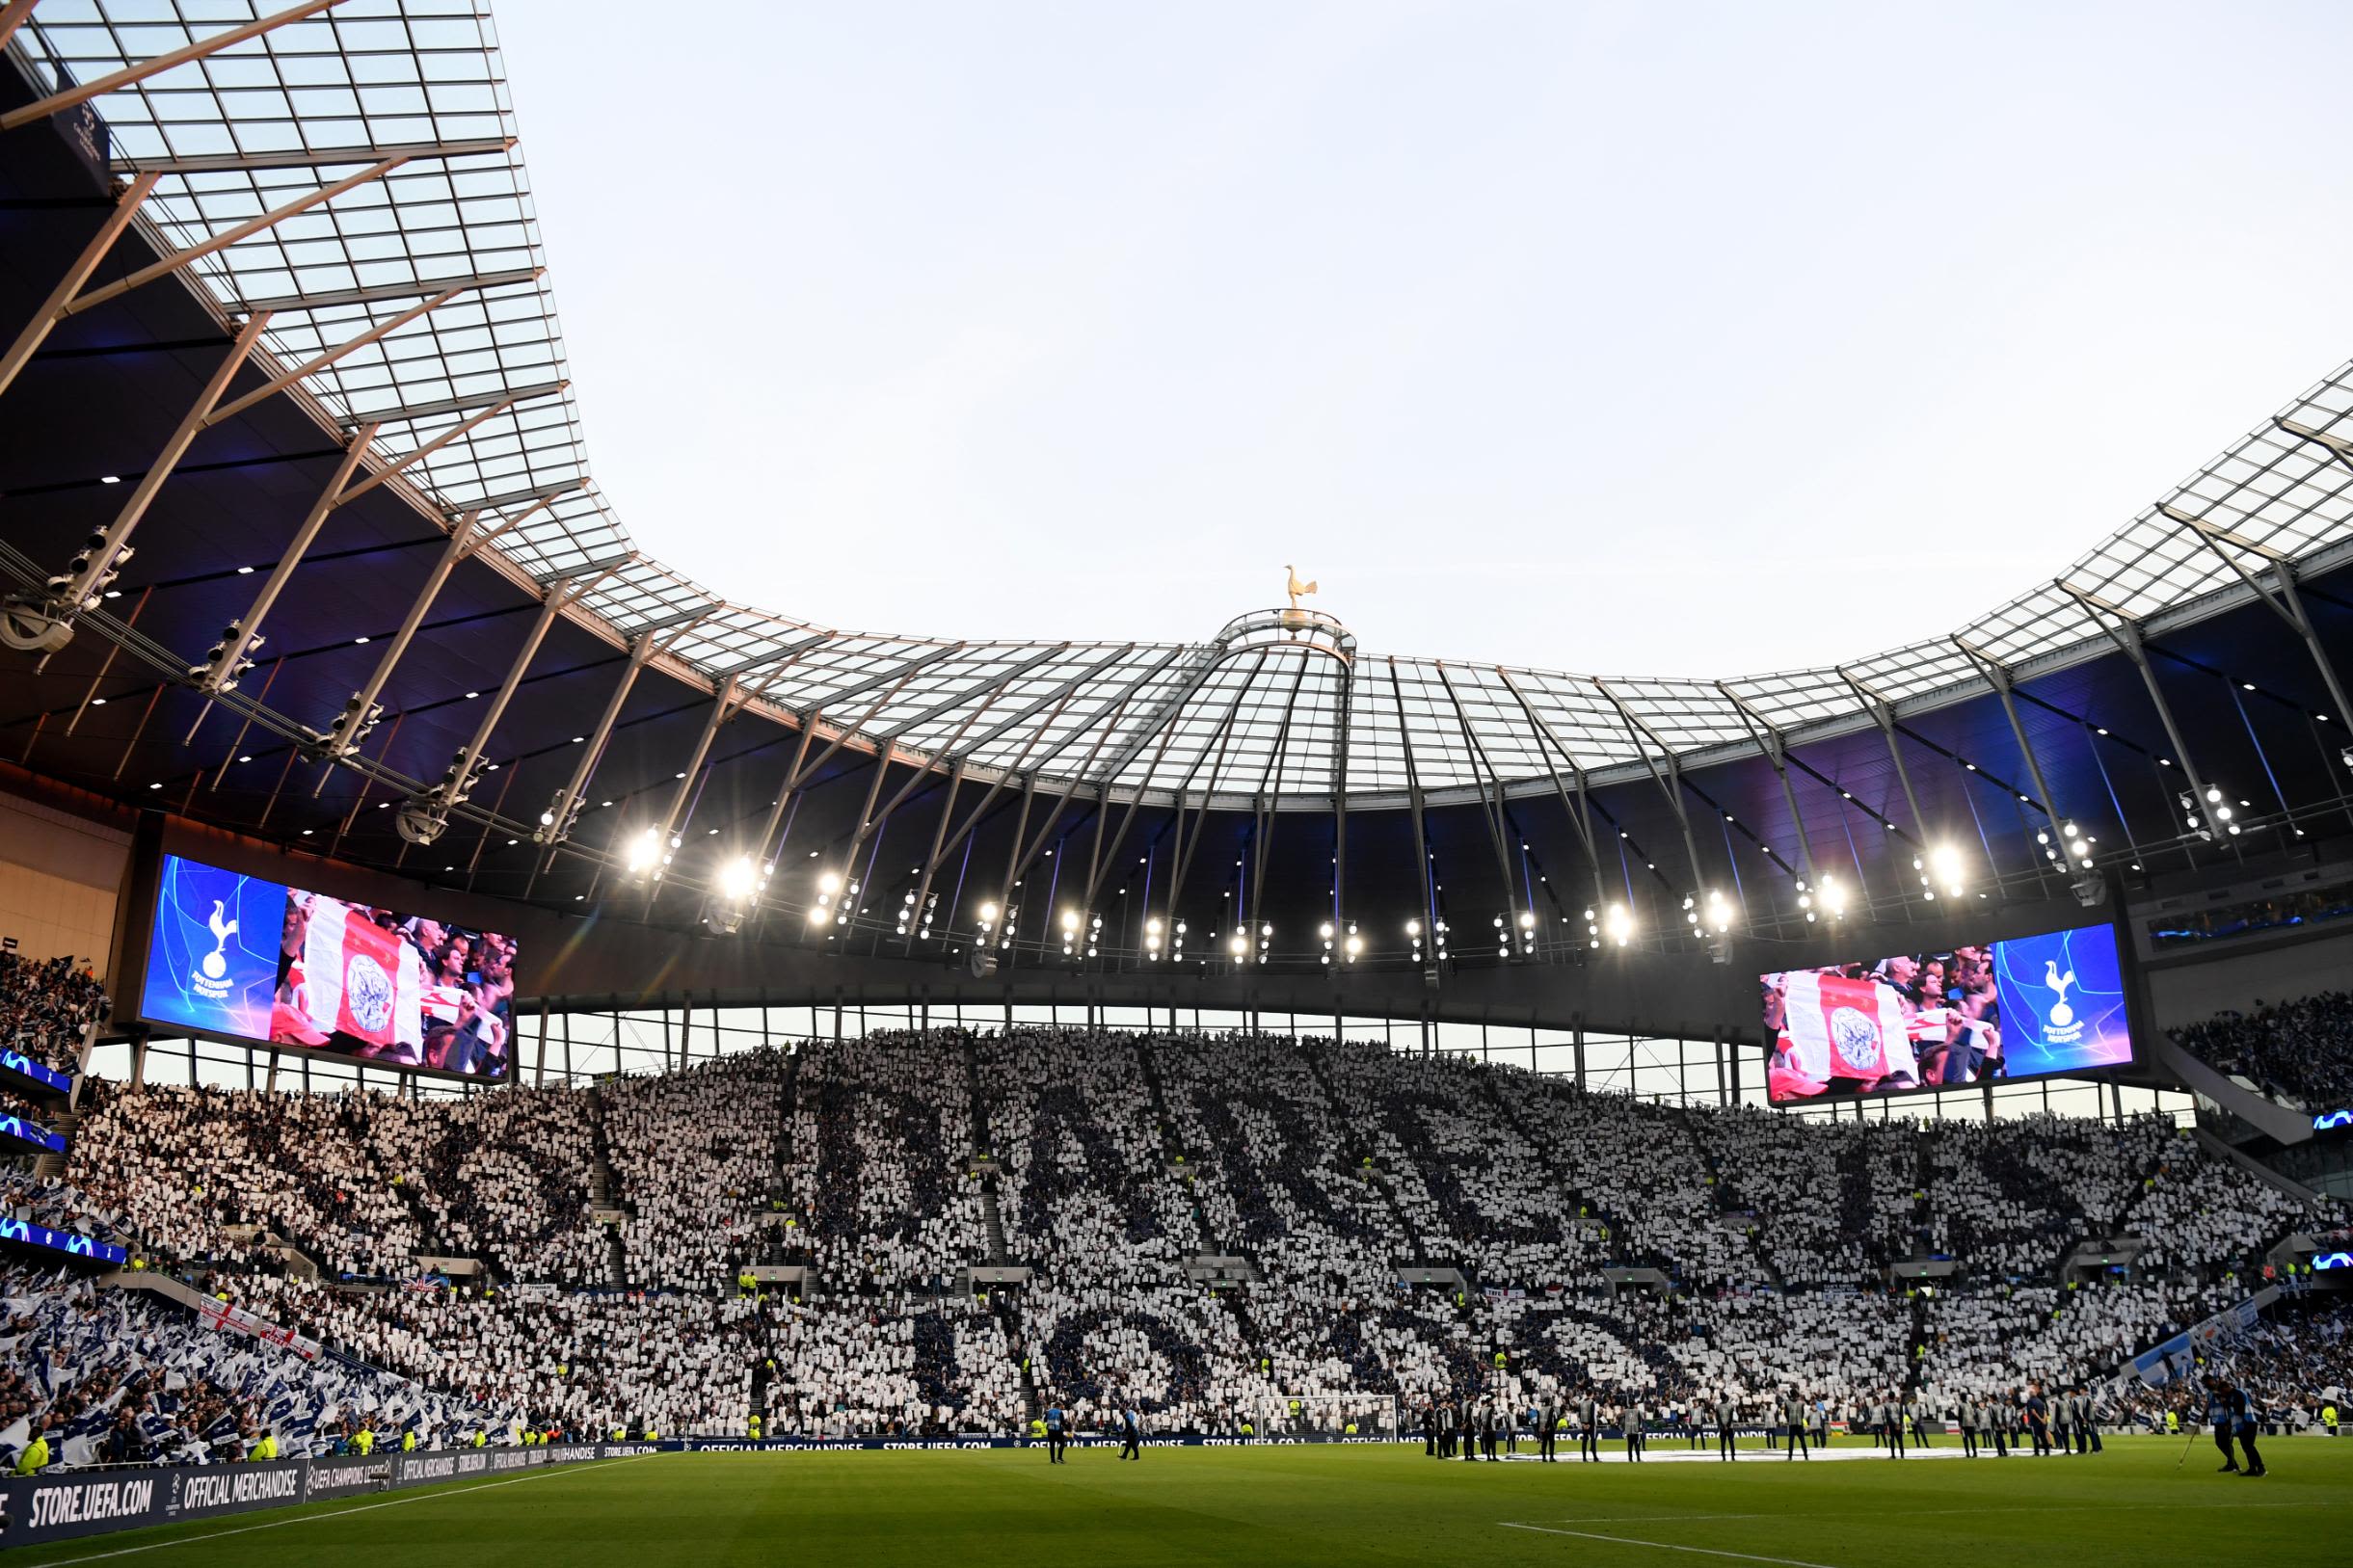 Tottenham Hotspur added a new photo. - Tottenham Hotspur